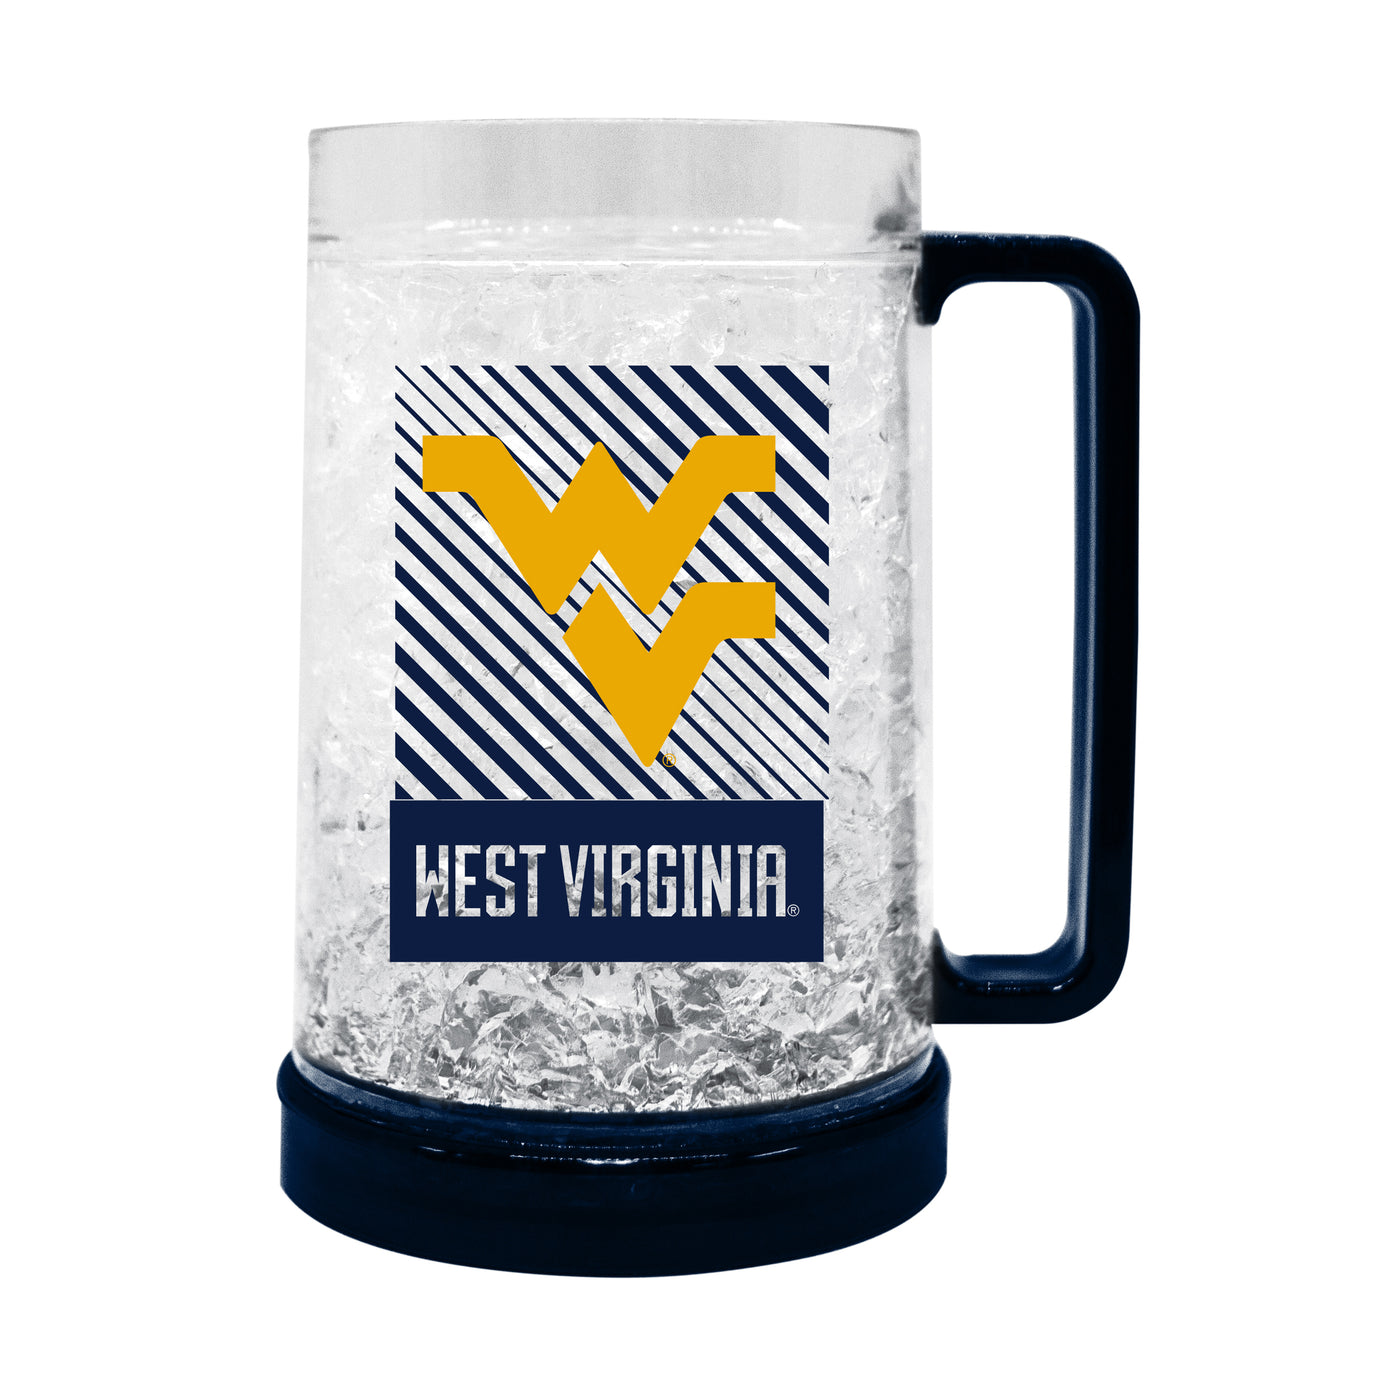 West Virginia Freezer Mug